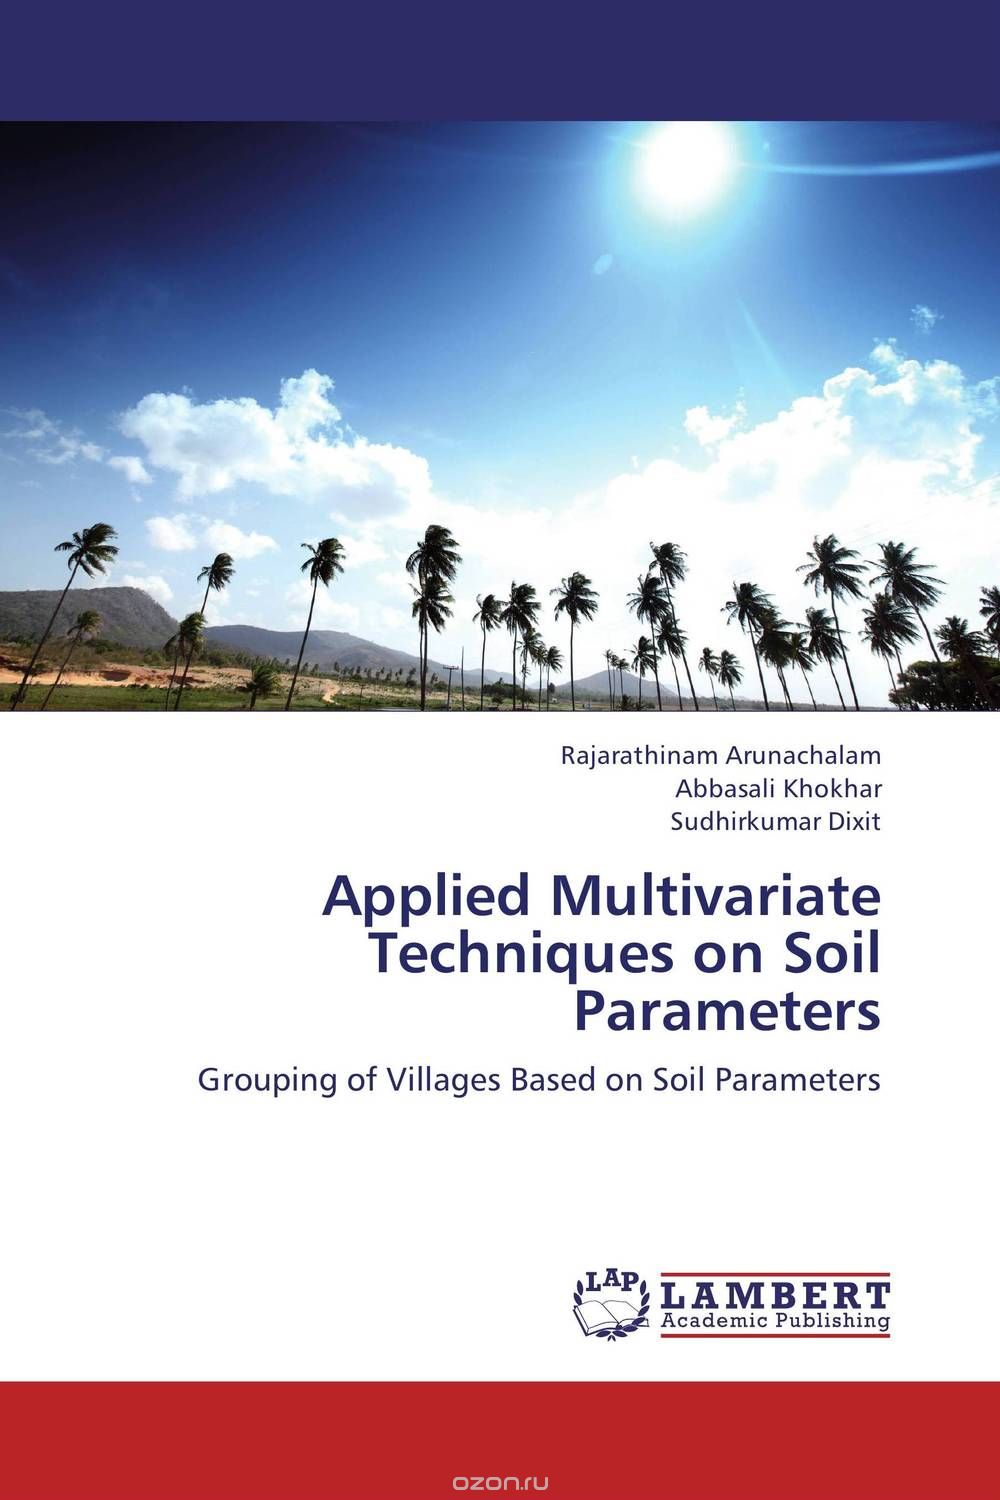 Скачать книгу "Applied Multivariate Techniques on Soil Parameters"